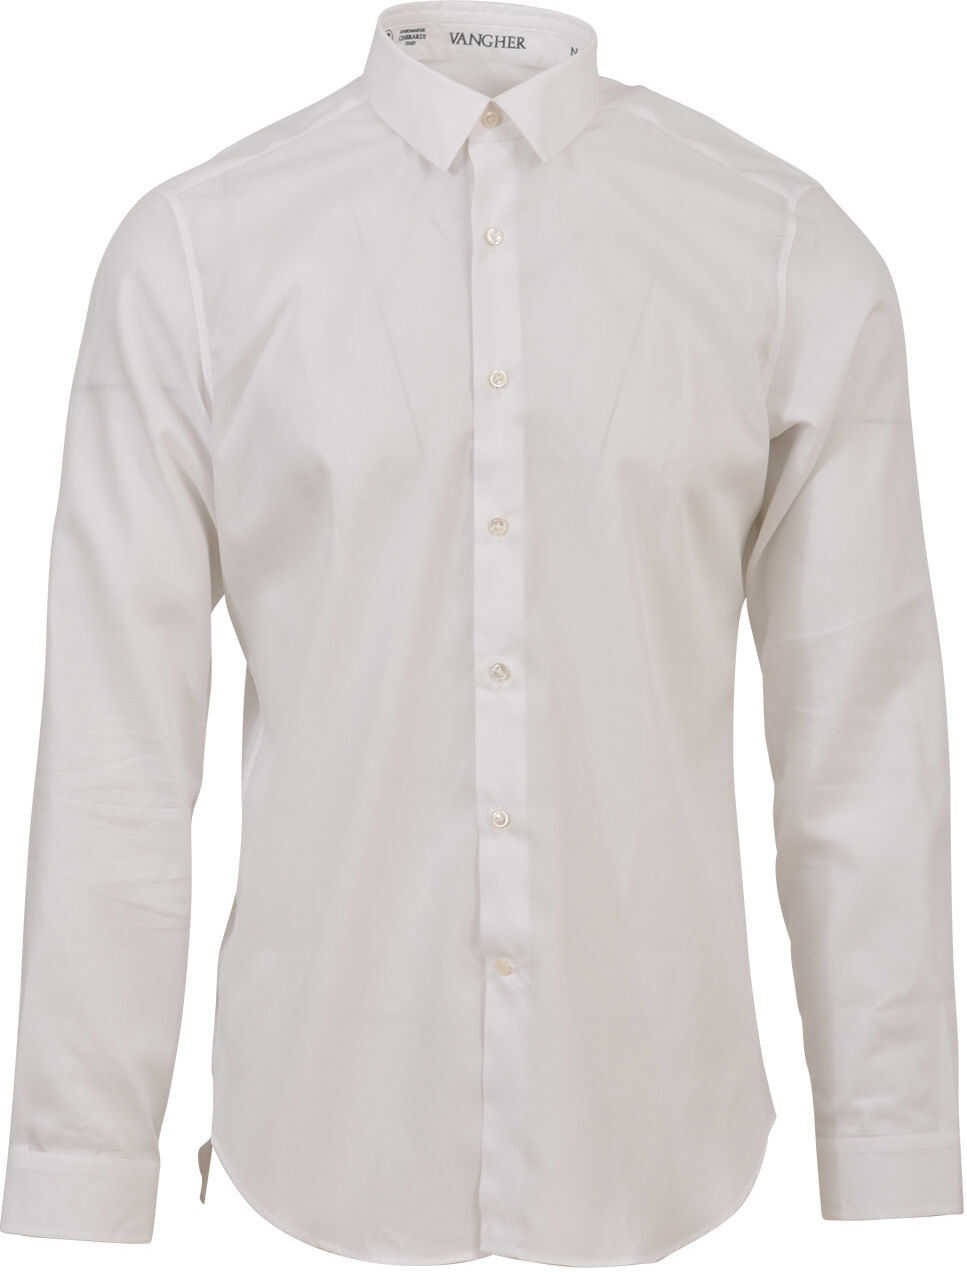 Vangher Cotton Shirt White